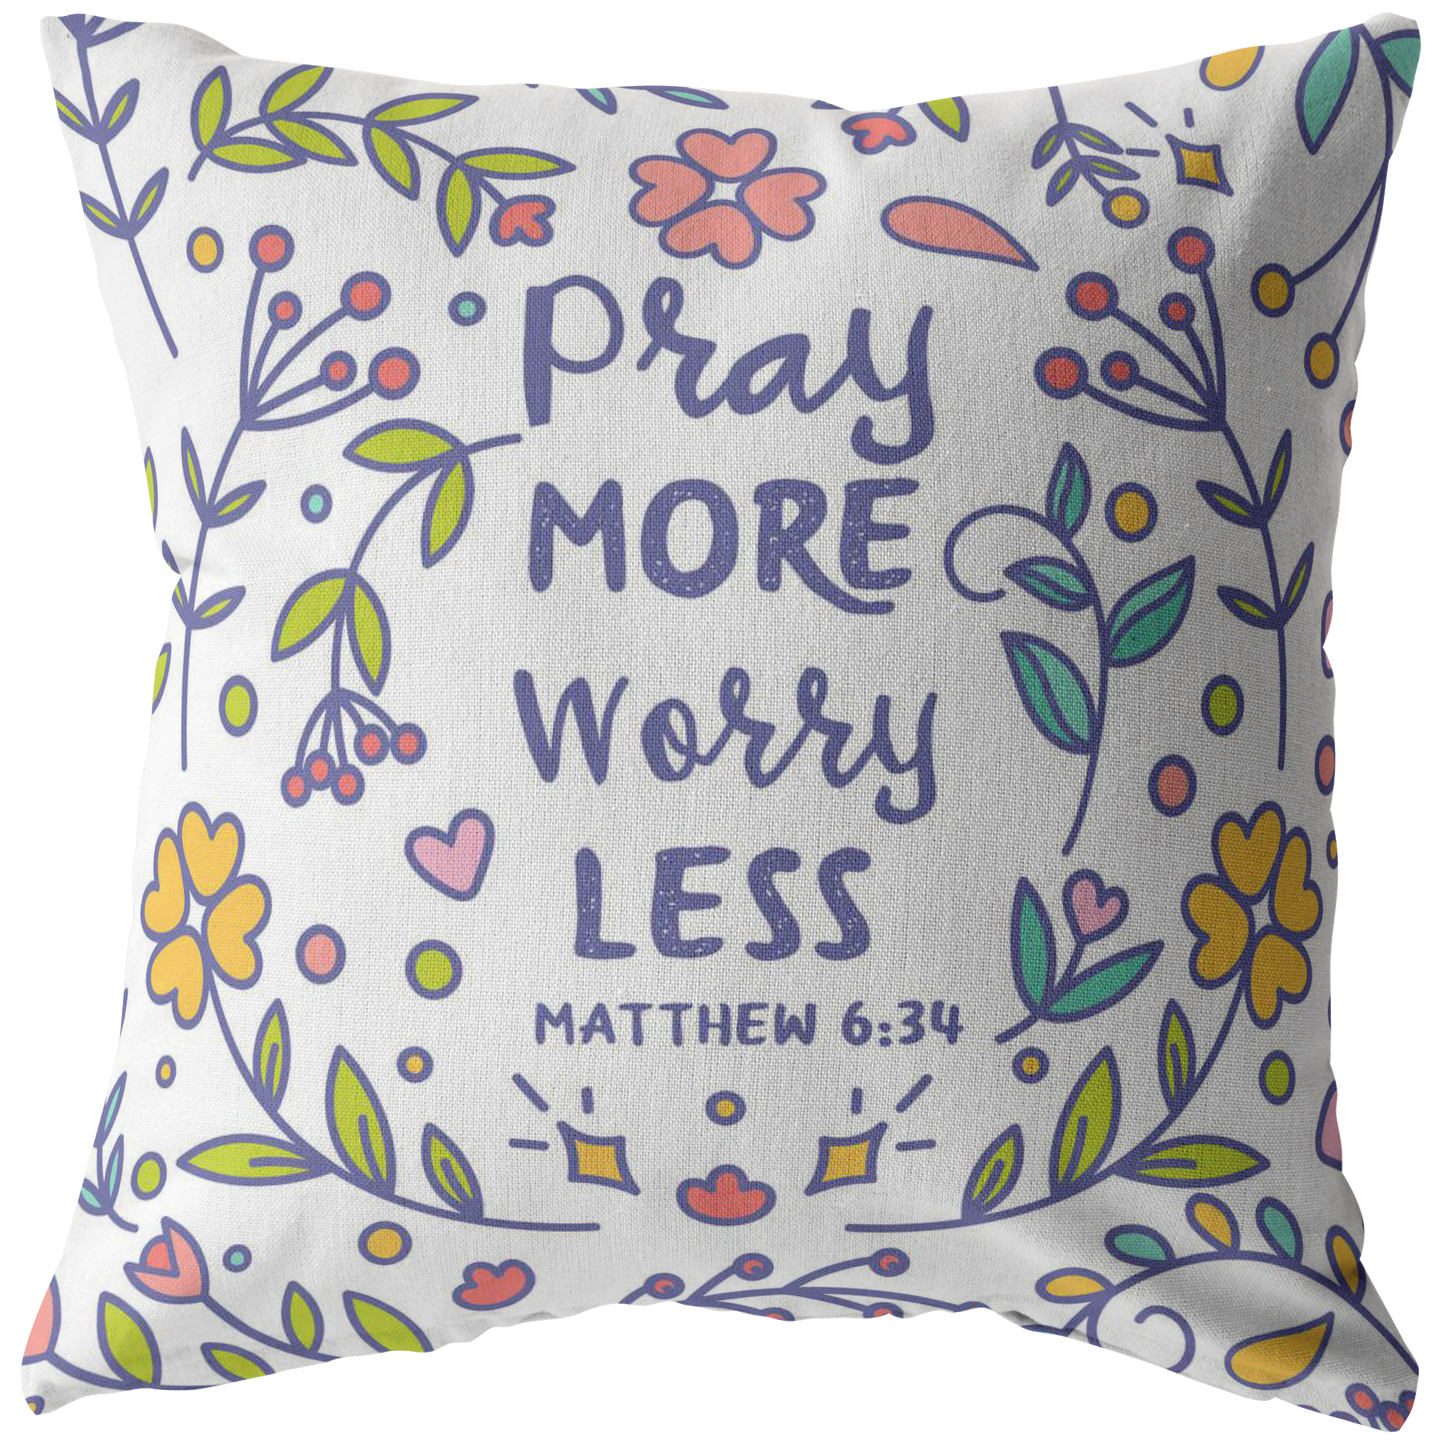 Pray More Worry Less, Matthew 6:34 - Pillow